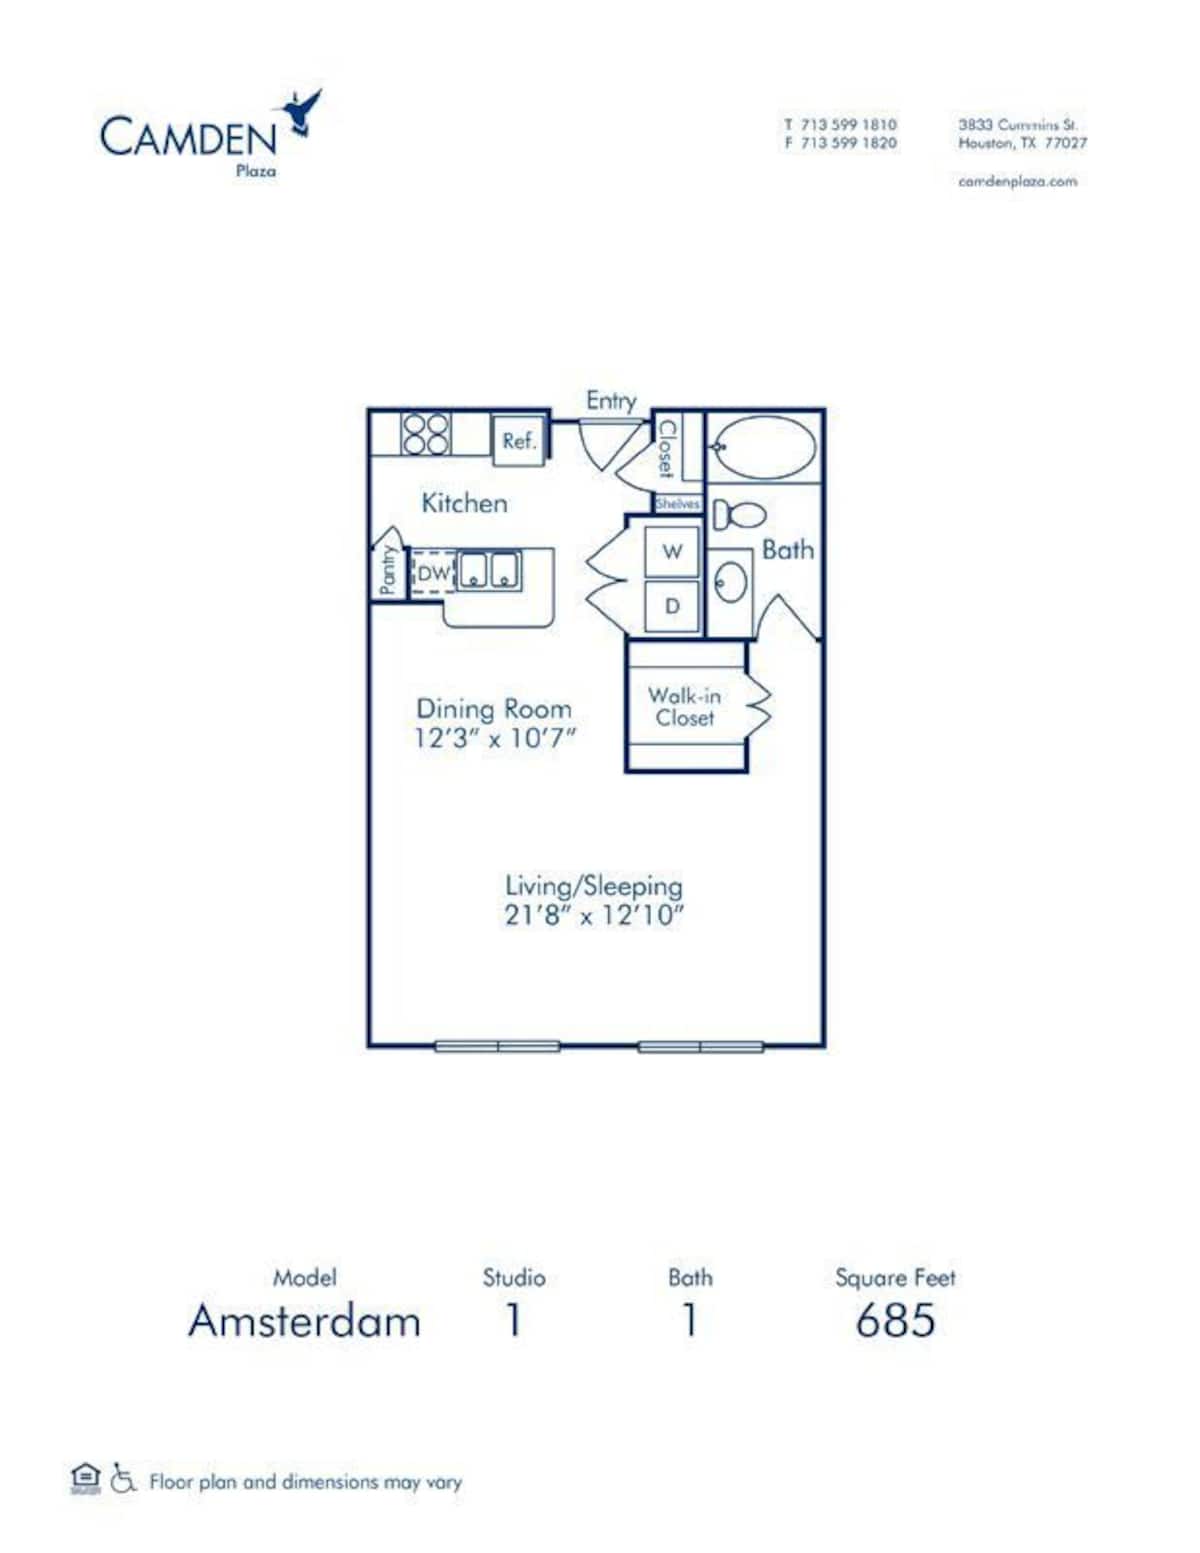 Floorplan diagram for Amsterdam, showing Studio